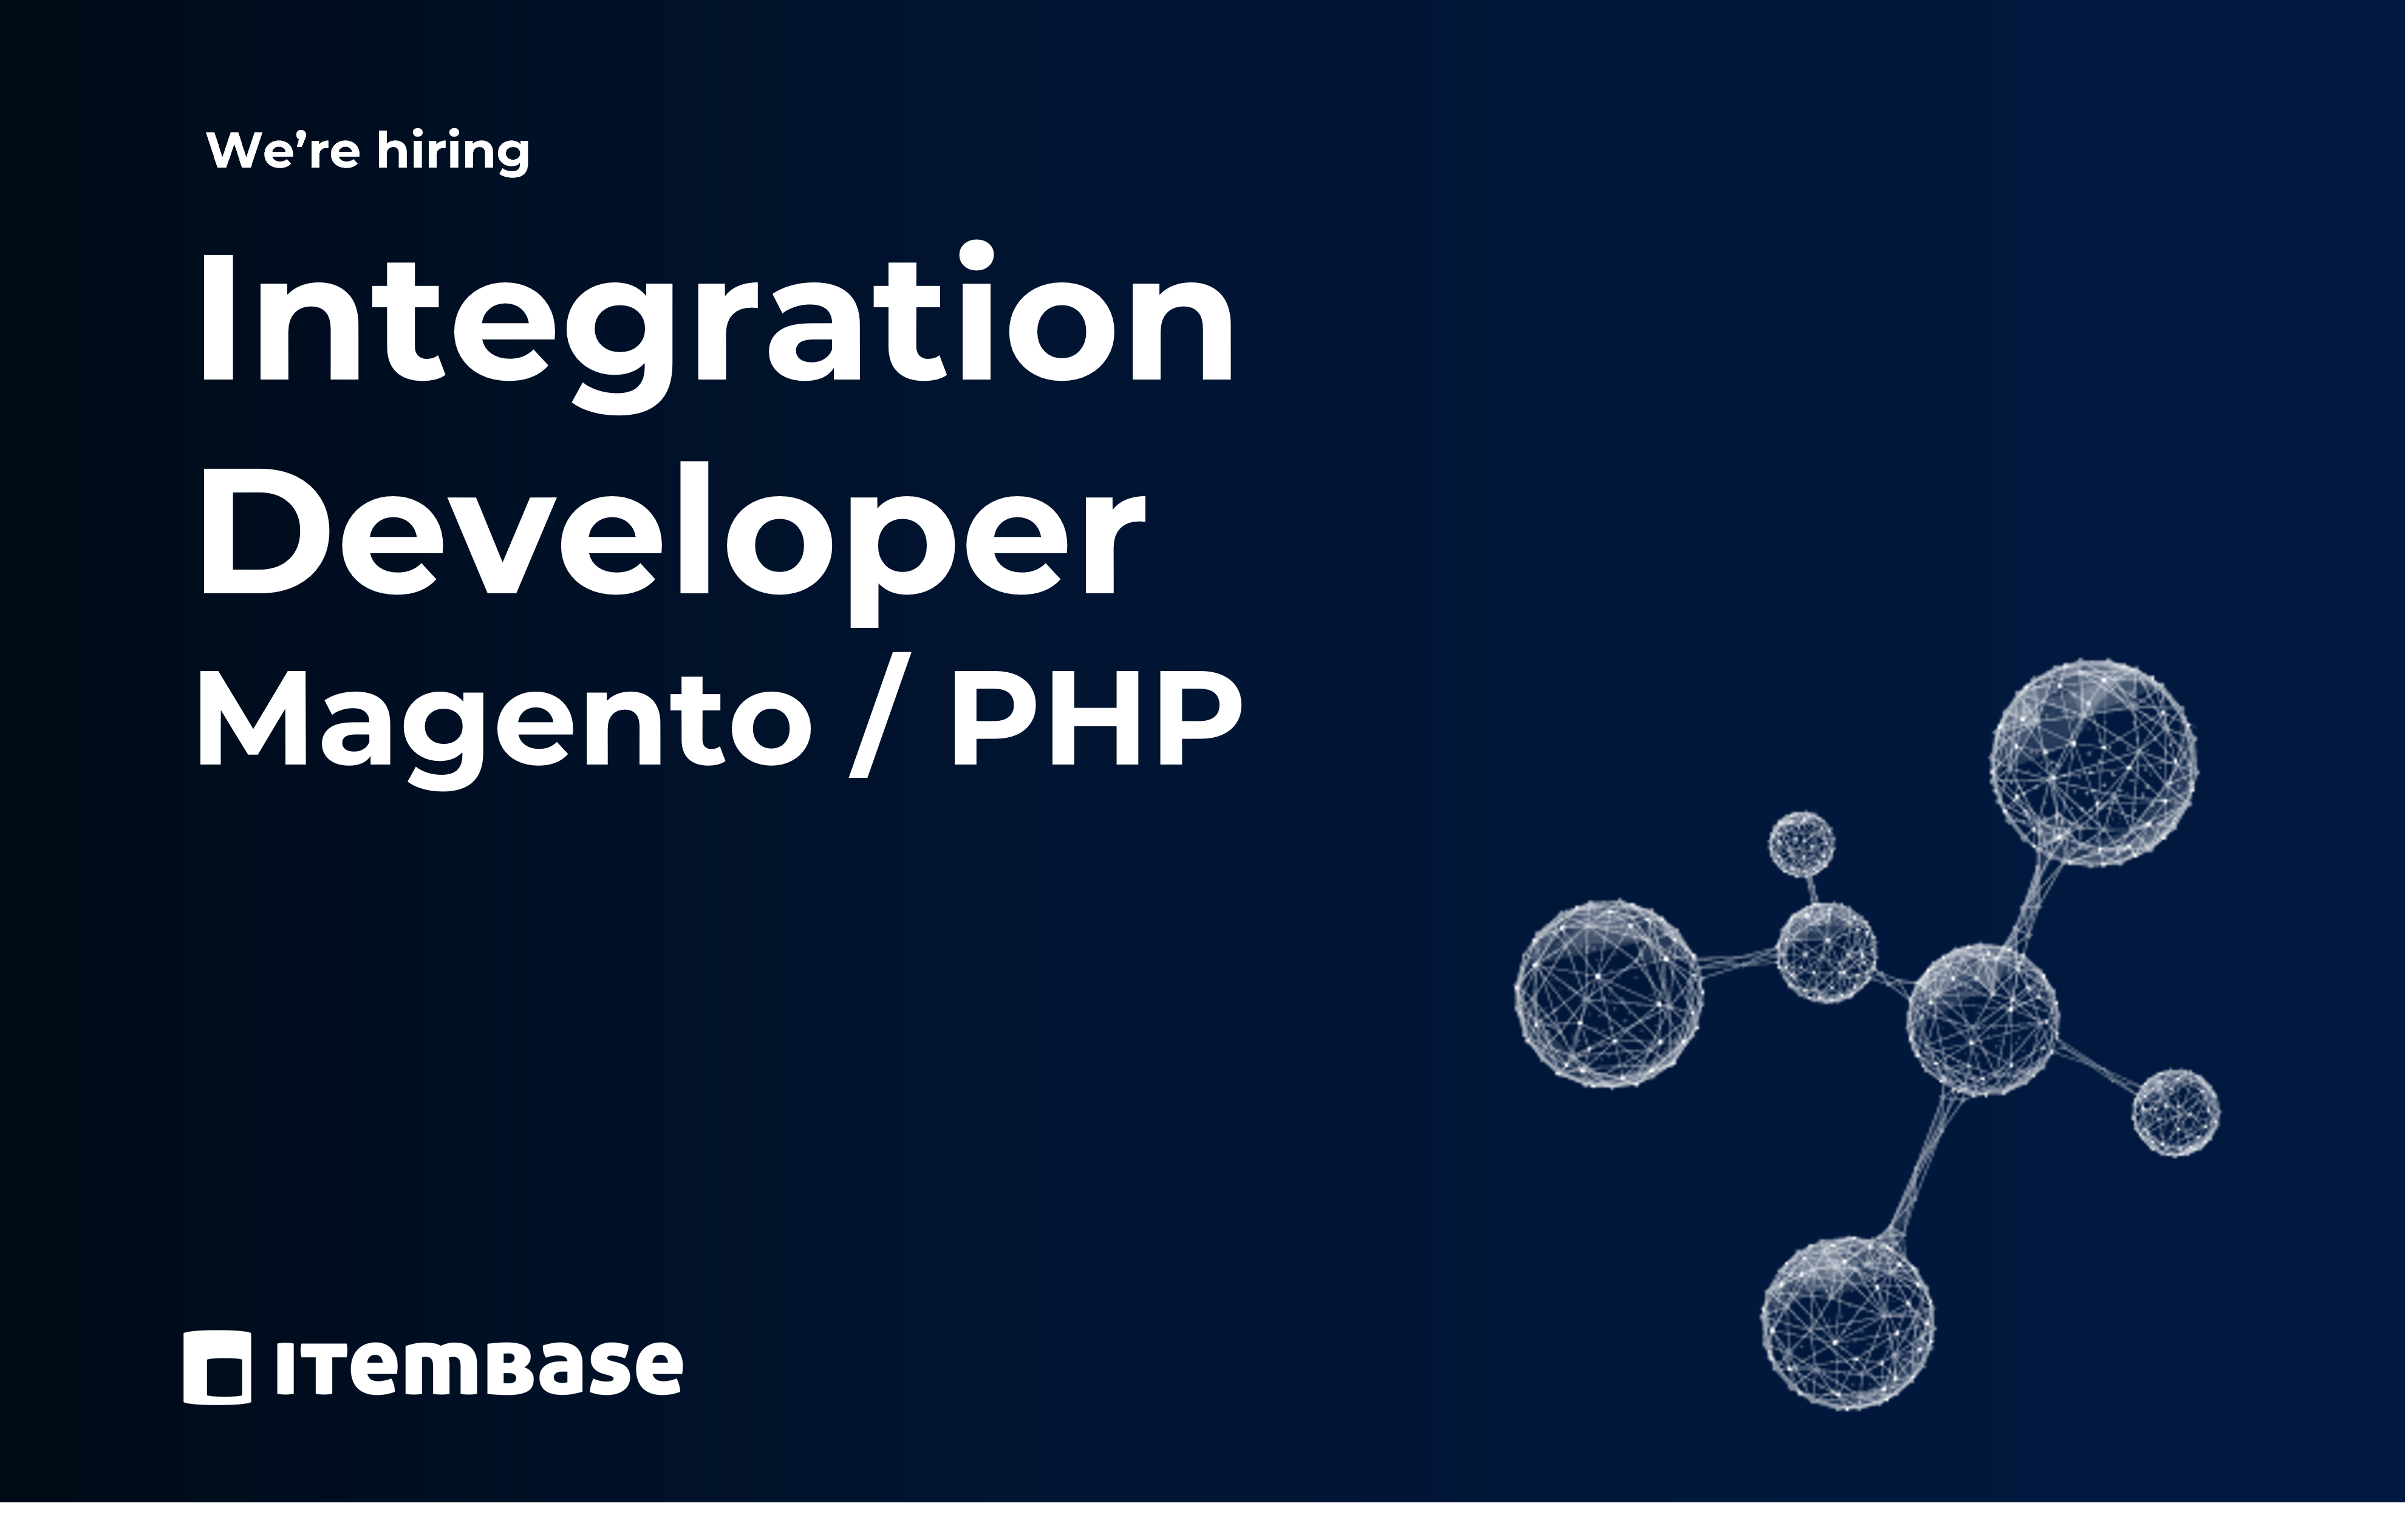 Open Position 010259- Itembase - Integration Developer Magento PHP